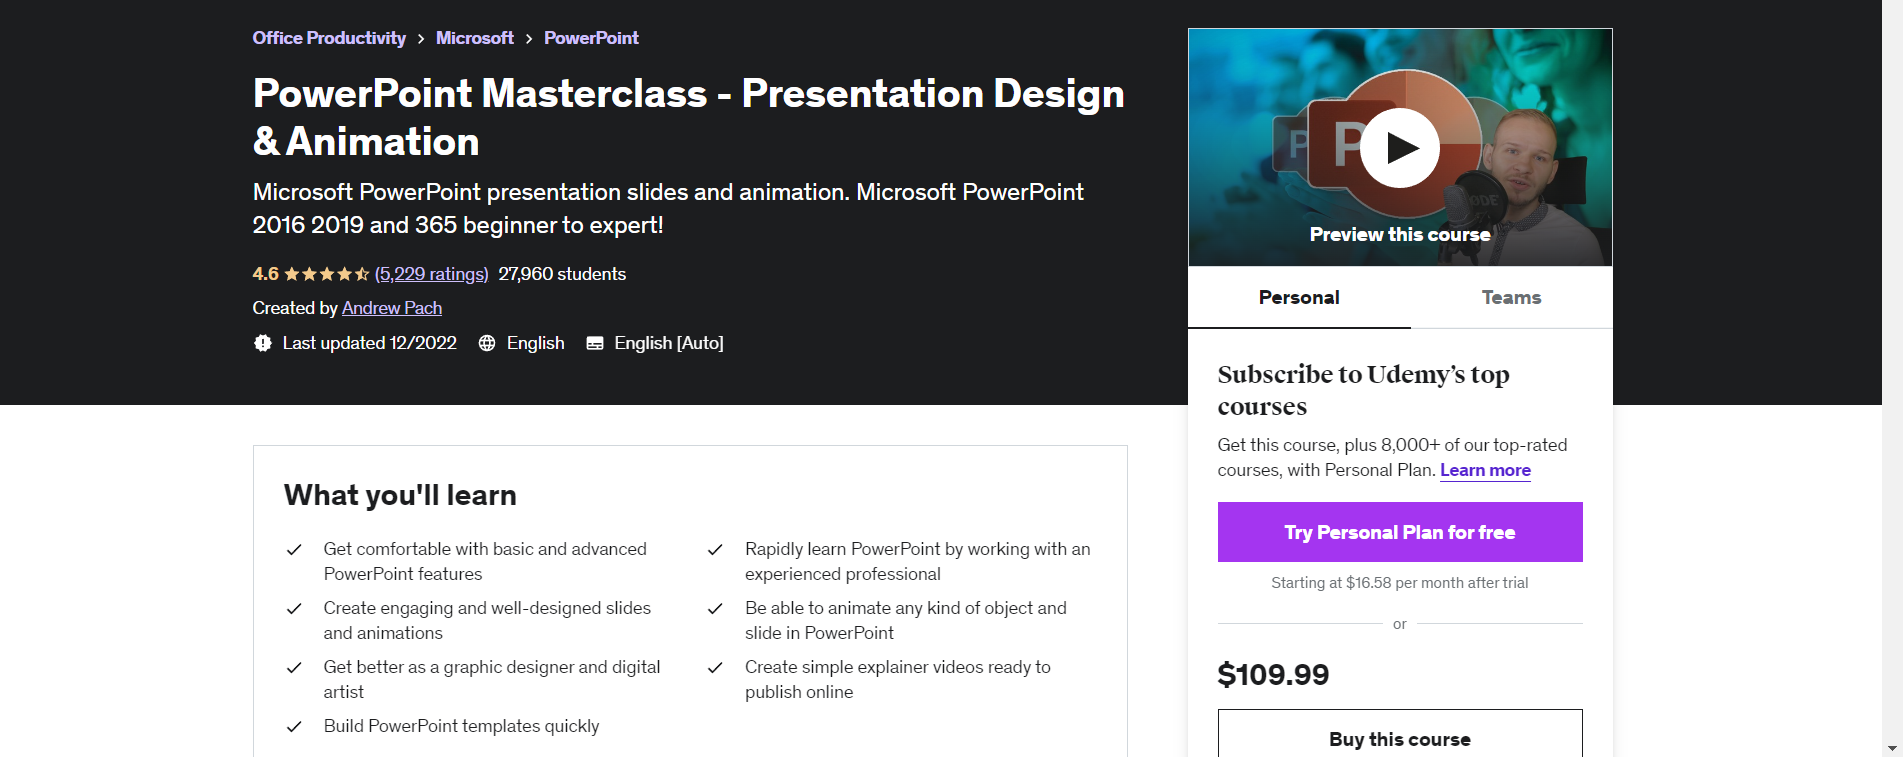 PowerPoint Masterclass- Presentation Design and Animation